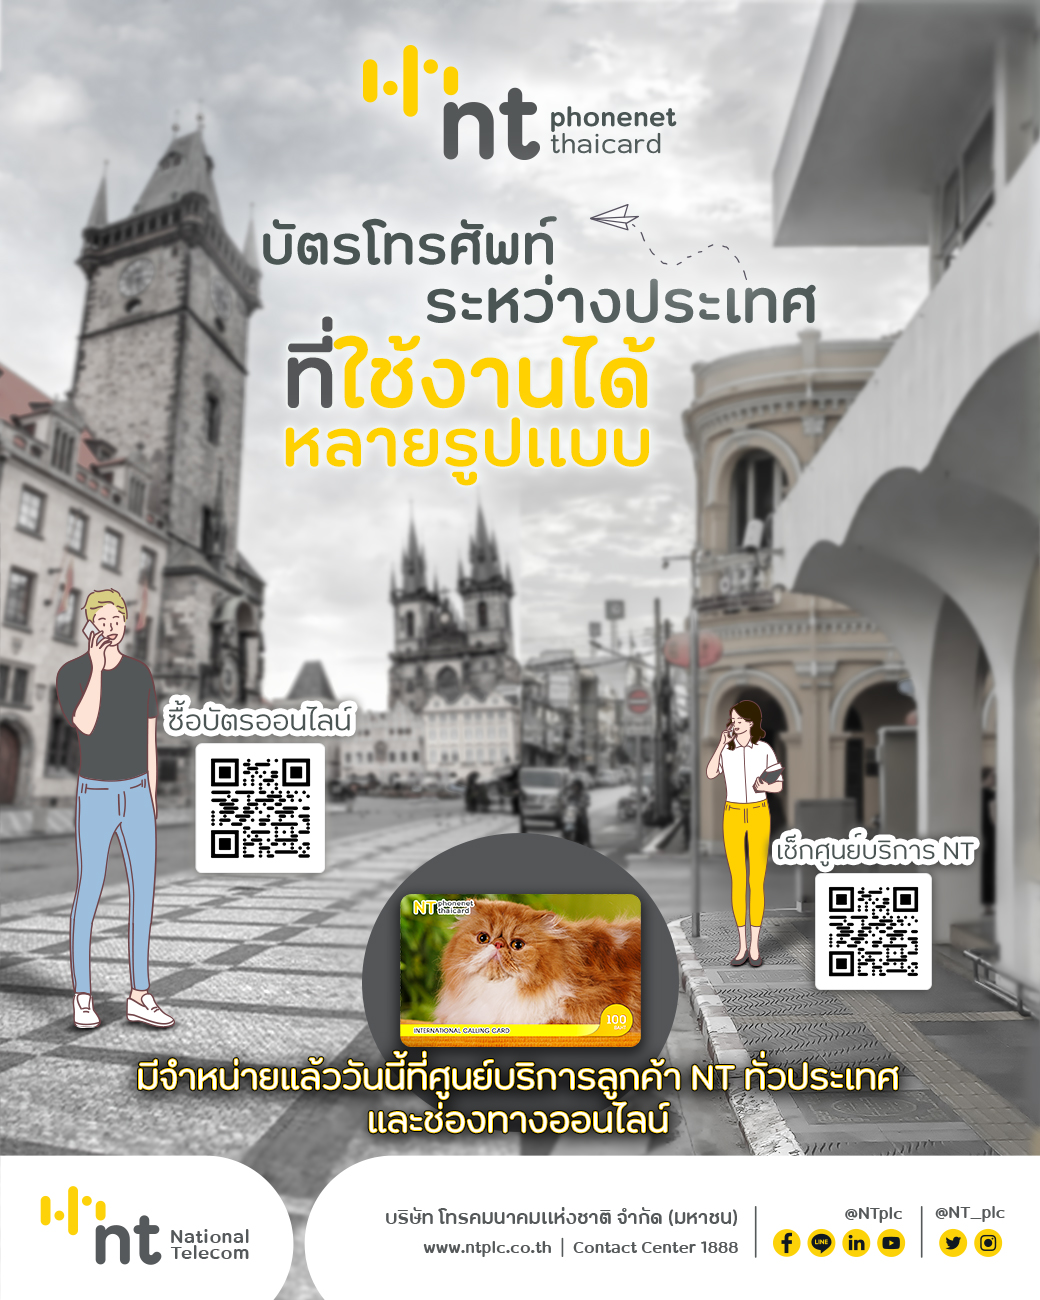 NT phonenet/thaicard มีจำหน่ายแล้ววันนี้ ที่ศูนย์บริการลูกค้า NT ทั่วประเทศ และ ช่องทางออนไลน์